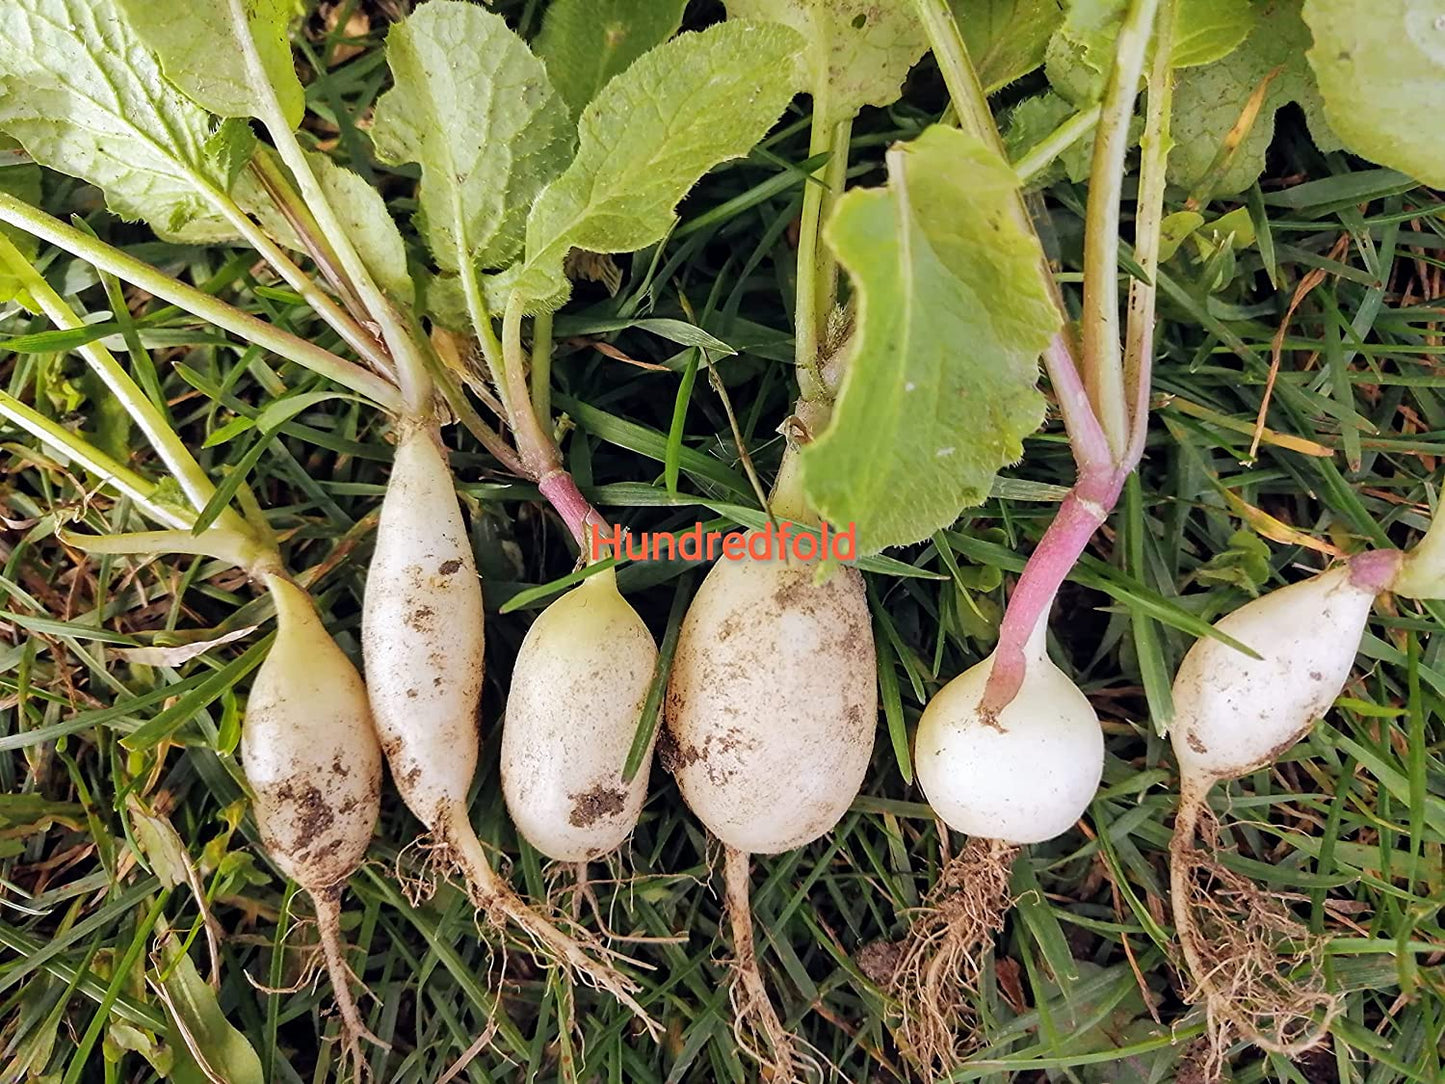 Hundredfold White Icicle Summer Radish 200 Vegetable Seeds - Non-GMO, Lady Finger or White Italian Radish, Fast Growing, Shipped in Canada